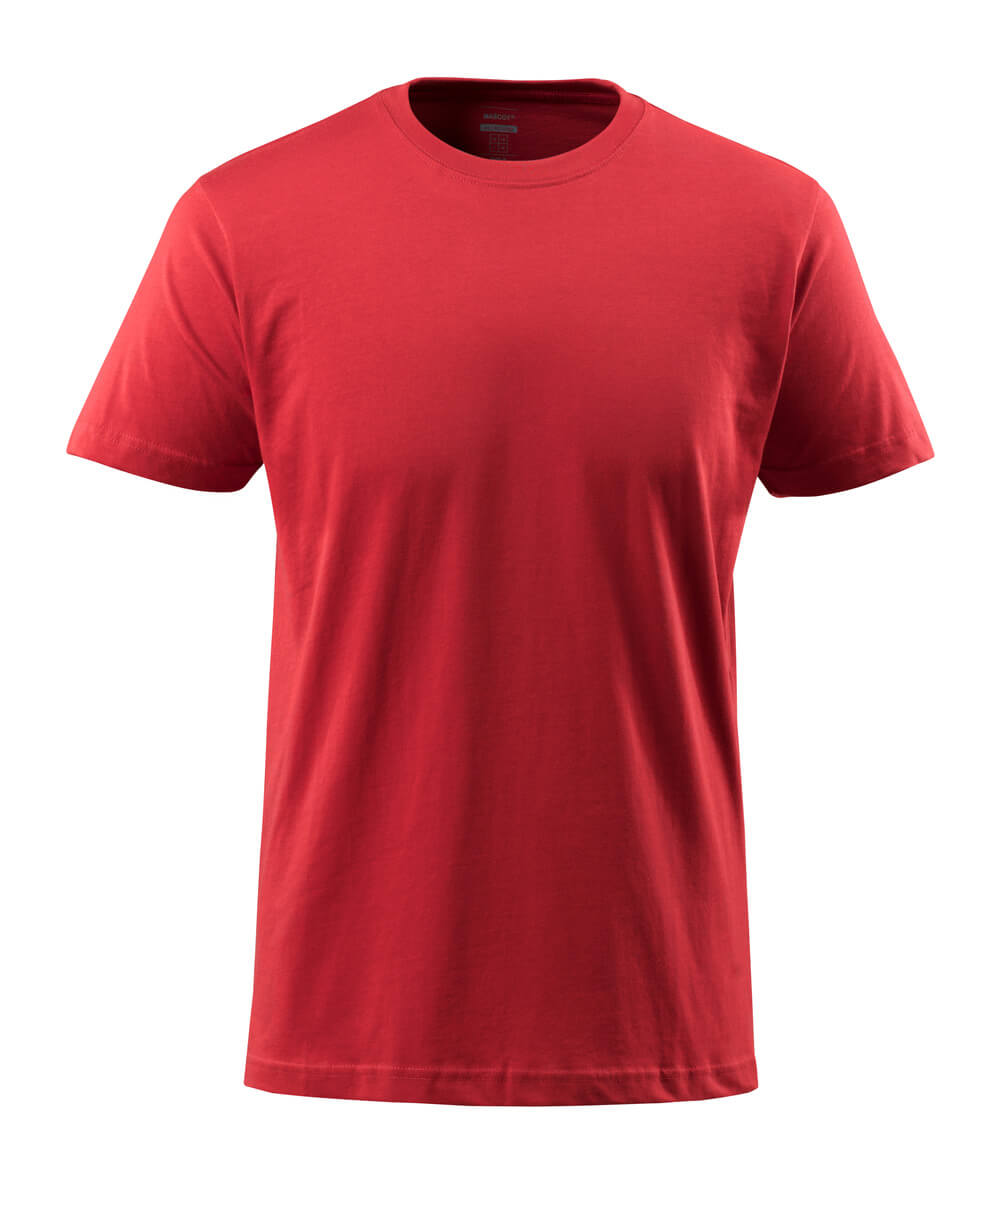 51579-965-02 T-shirt - rood